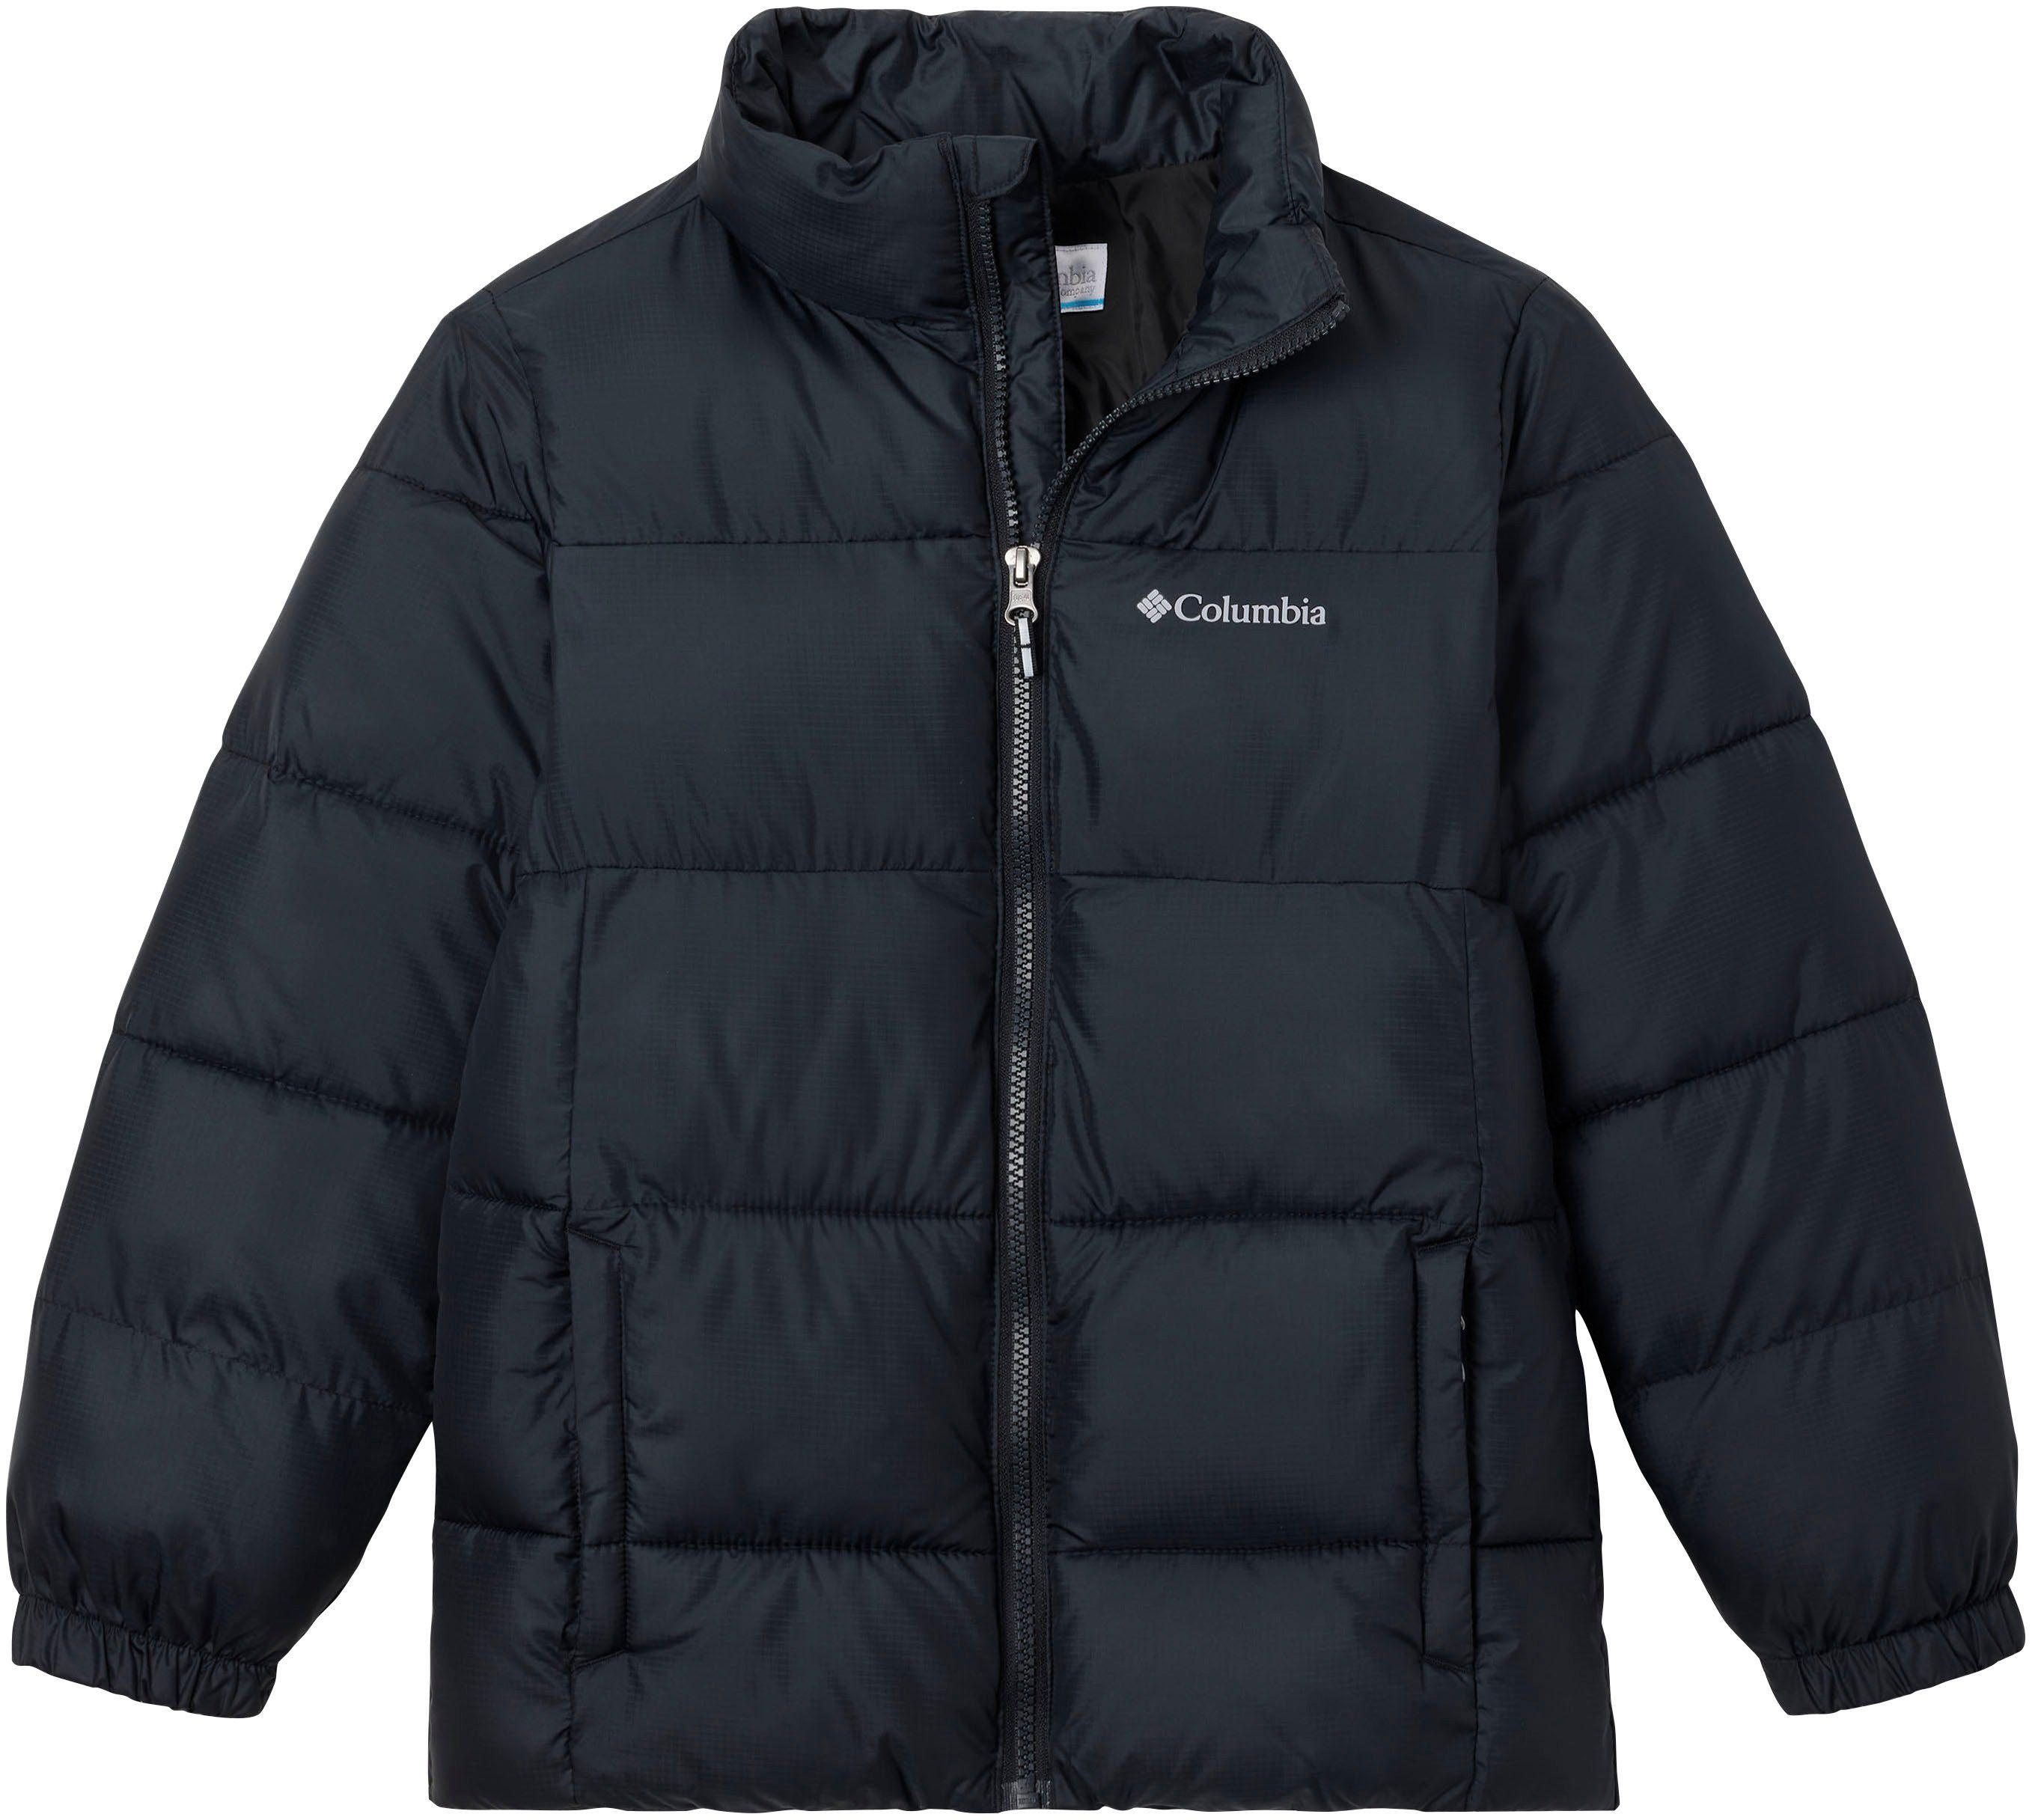 Columbia Steppjacke Puffect Jacket Für Kinder black